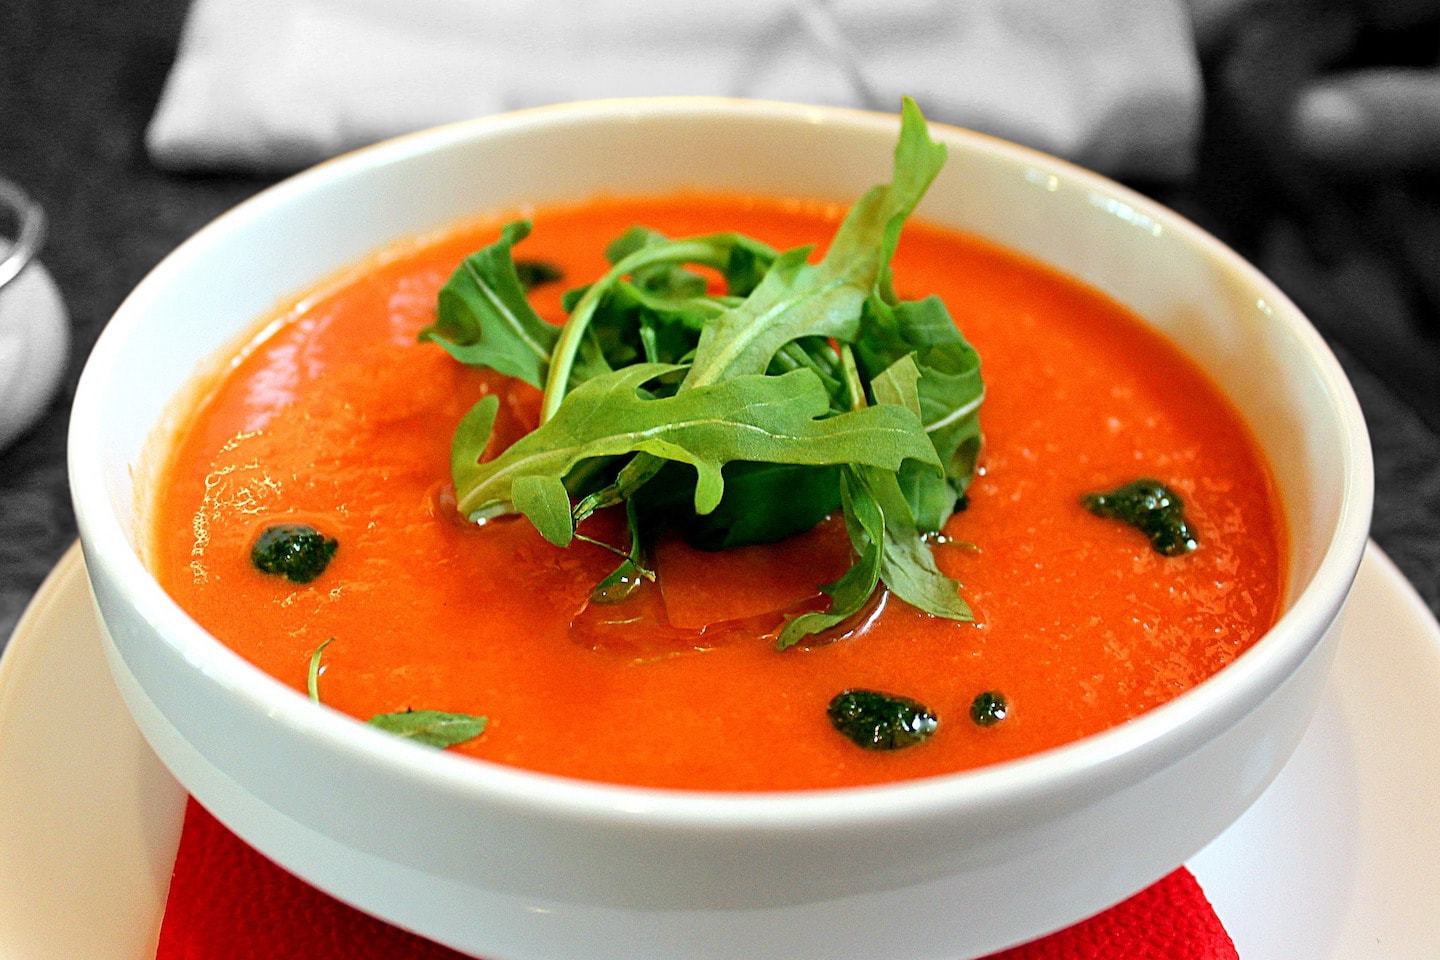 tomato soup with arugula garnish